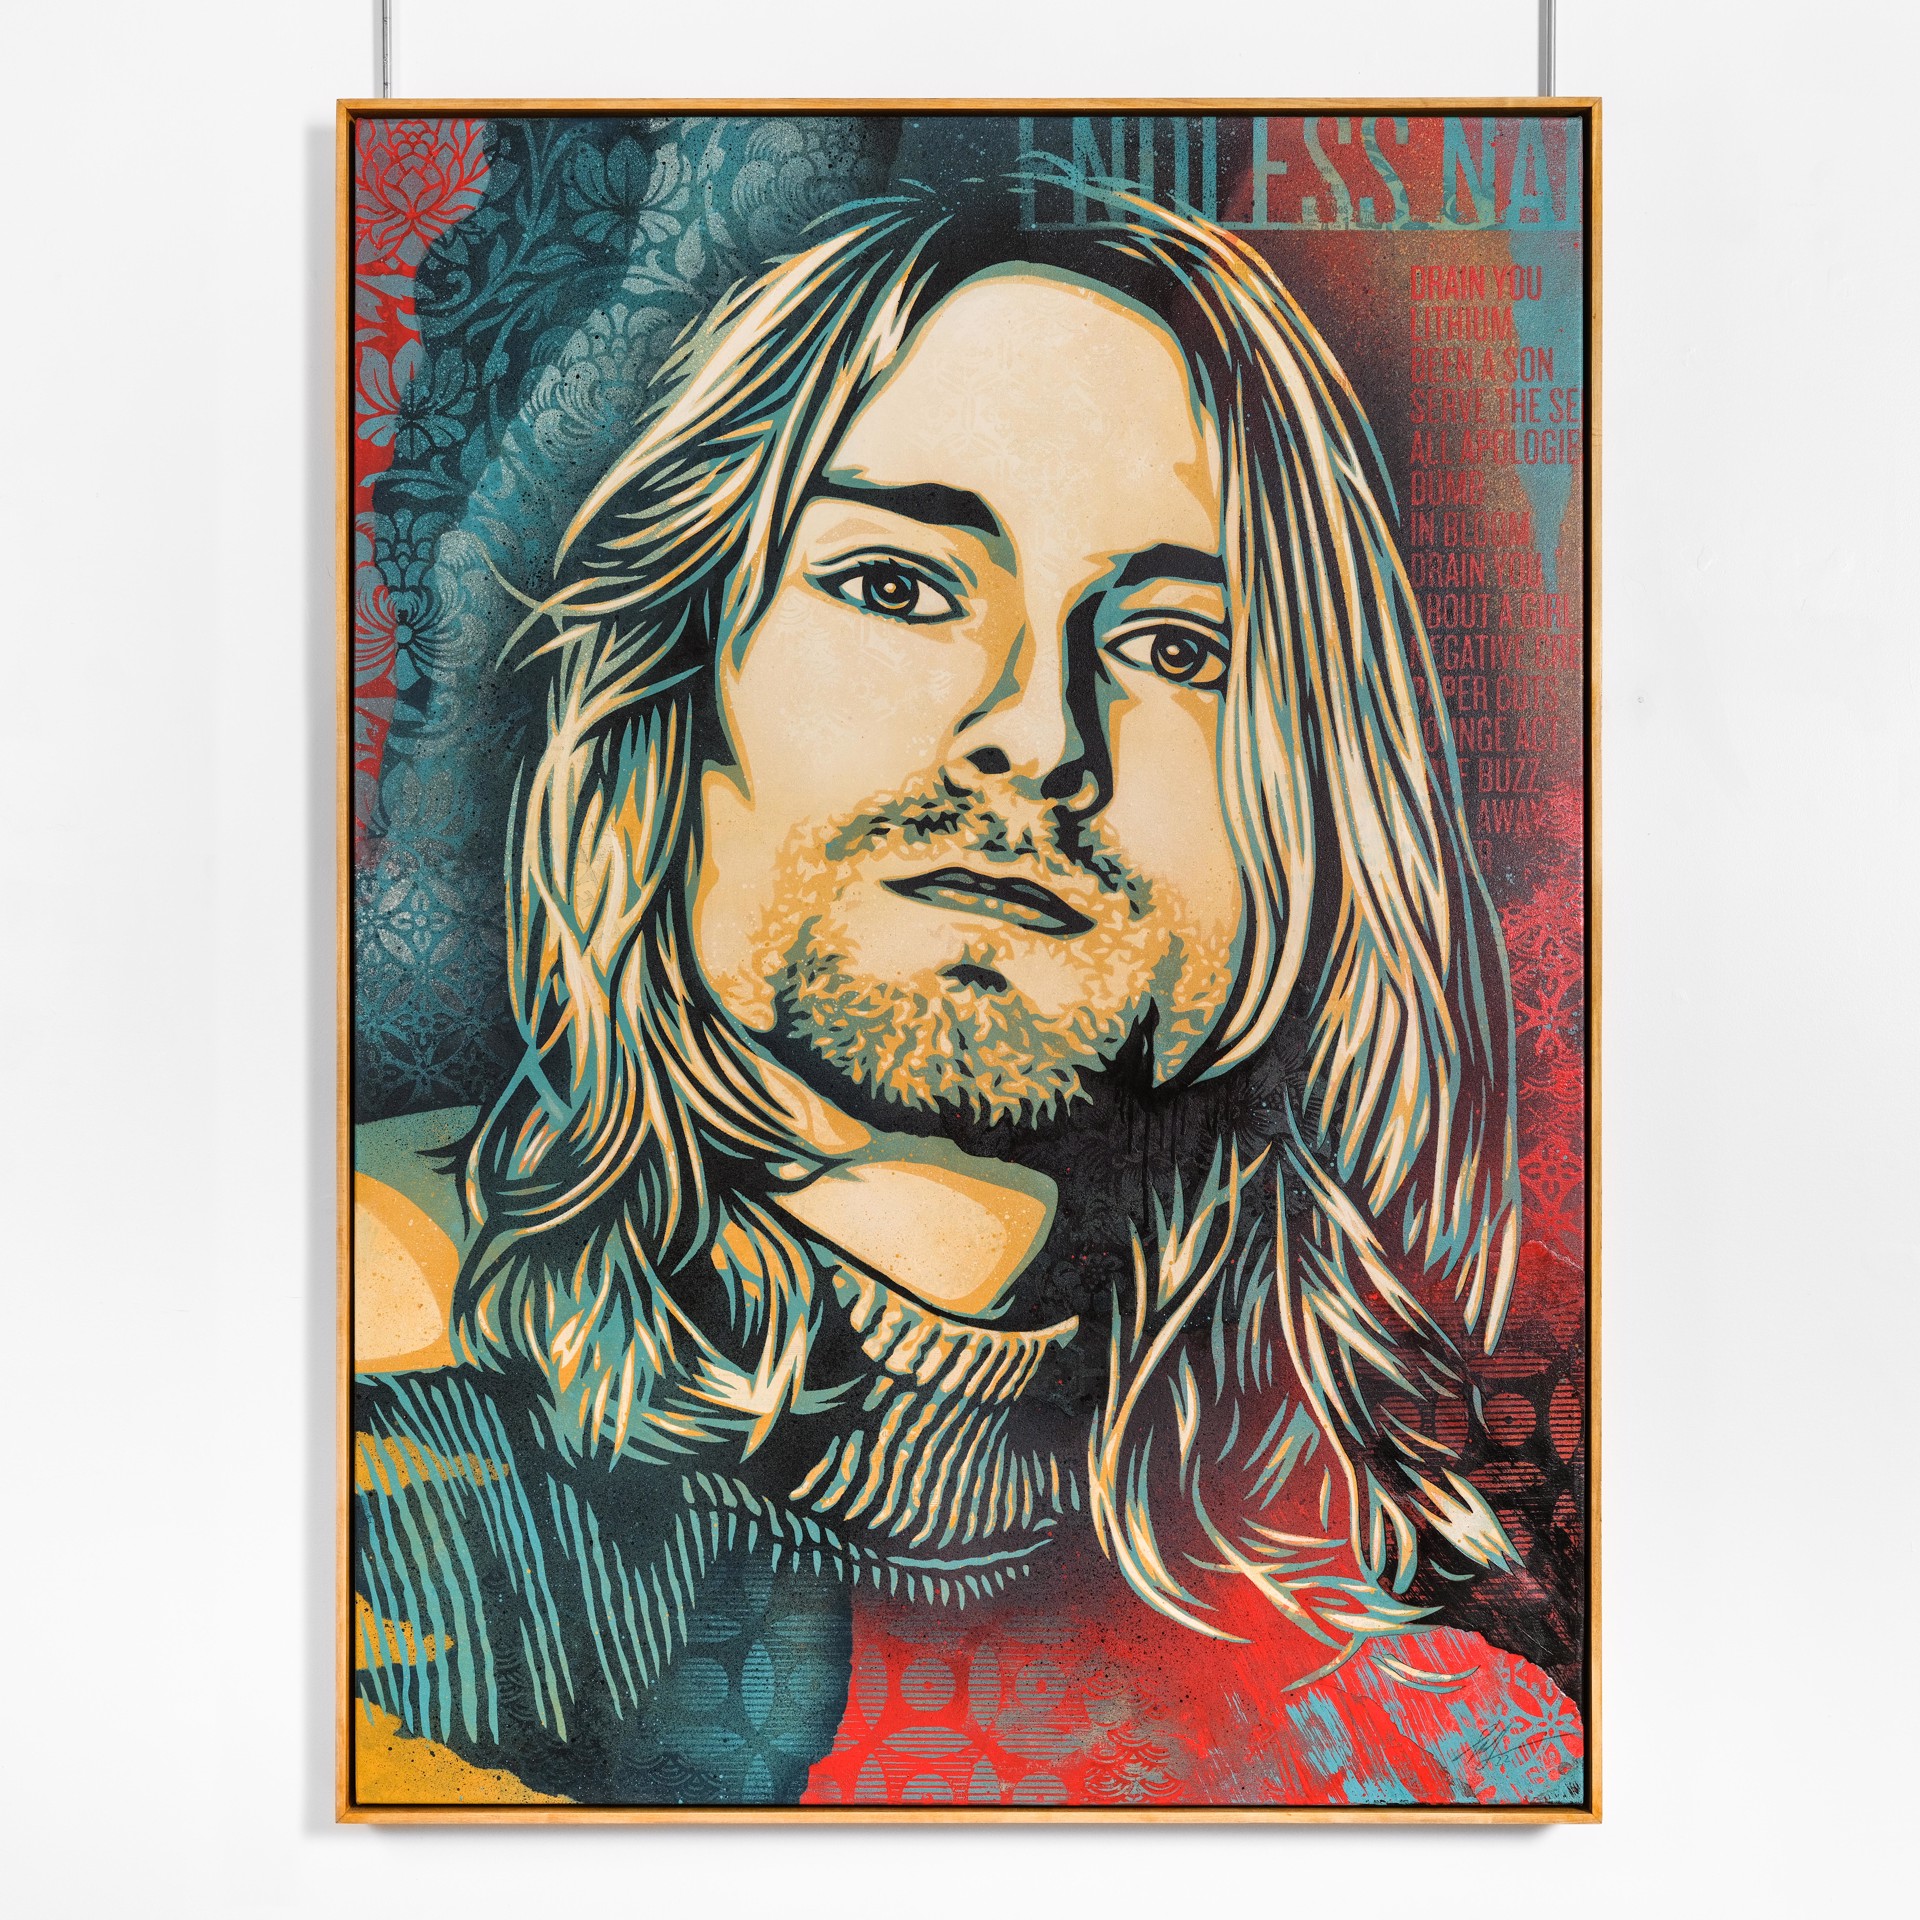 Kurt Cobain - Endless Nameless, Version 2 by Shepard Fairey /Originals